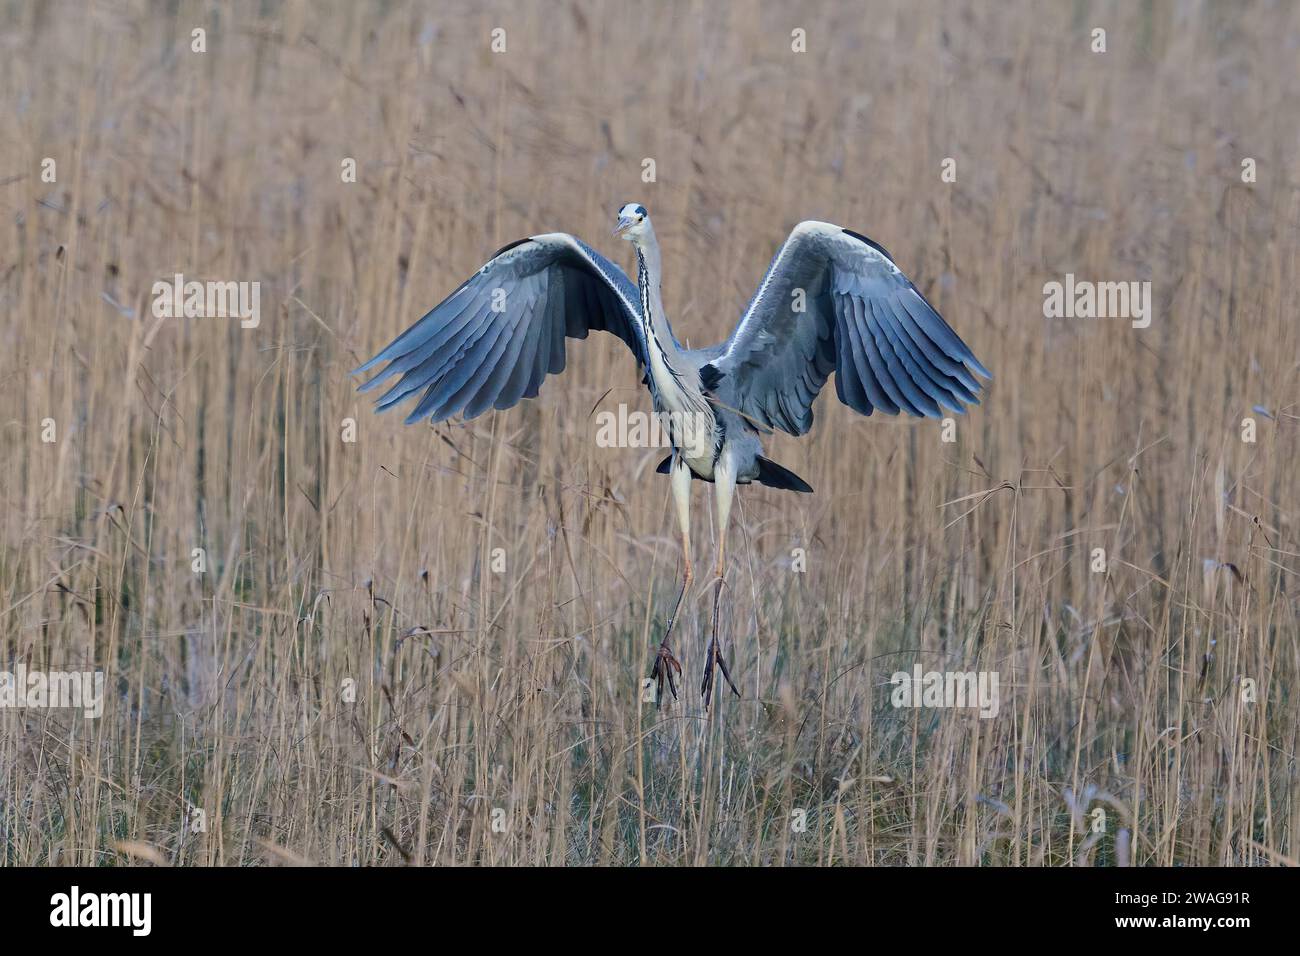 Grey heron (Ardea cinerea) in its natural environment Stock Photo